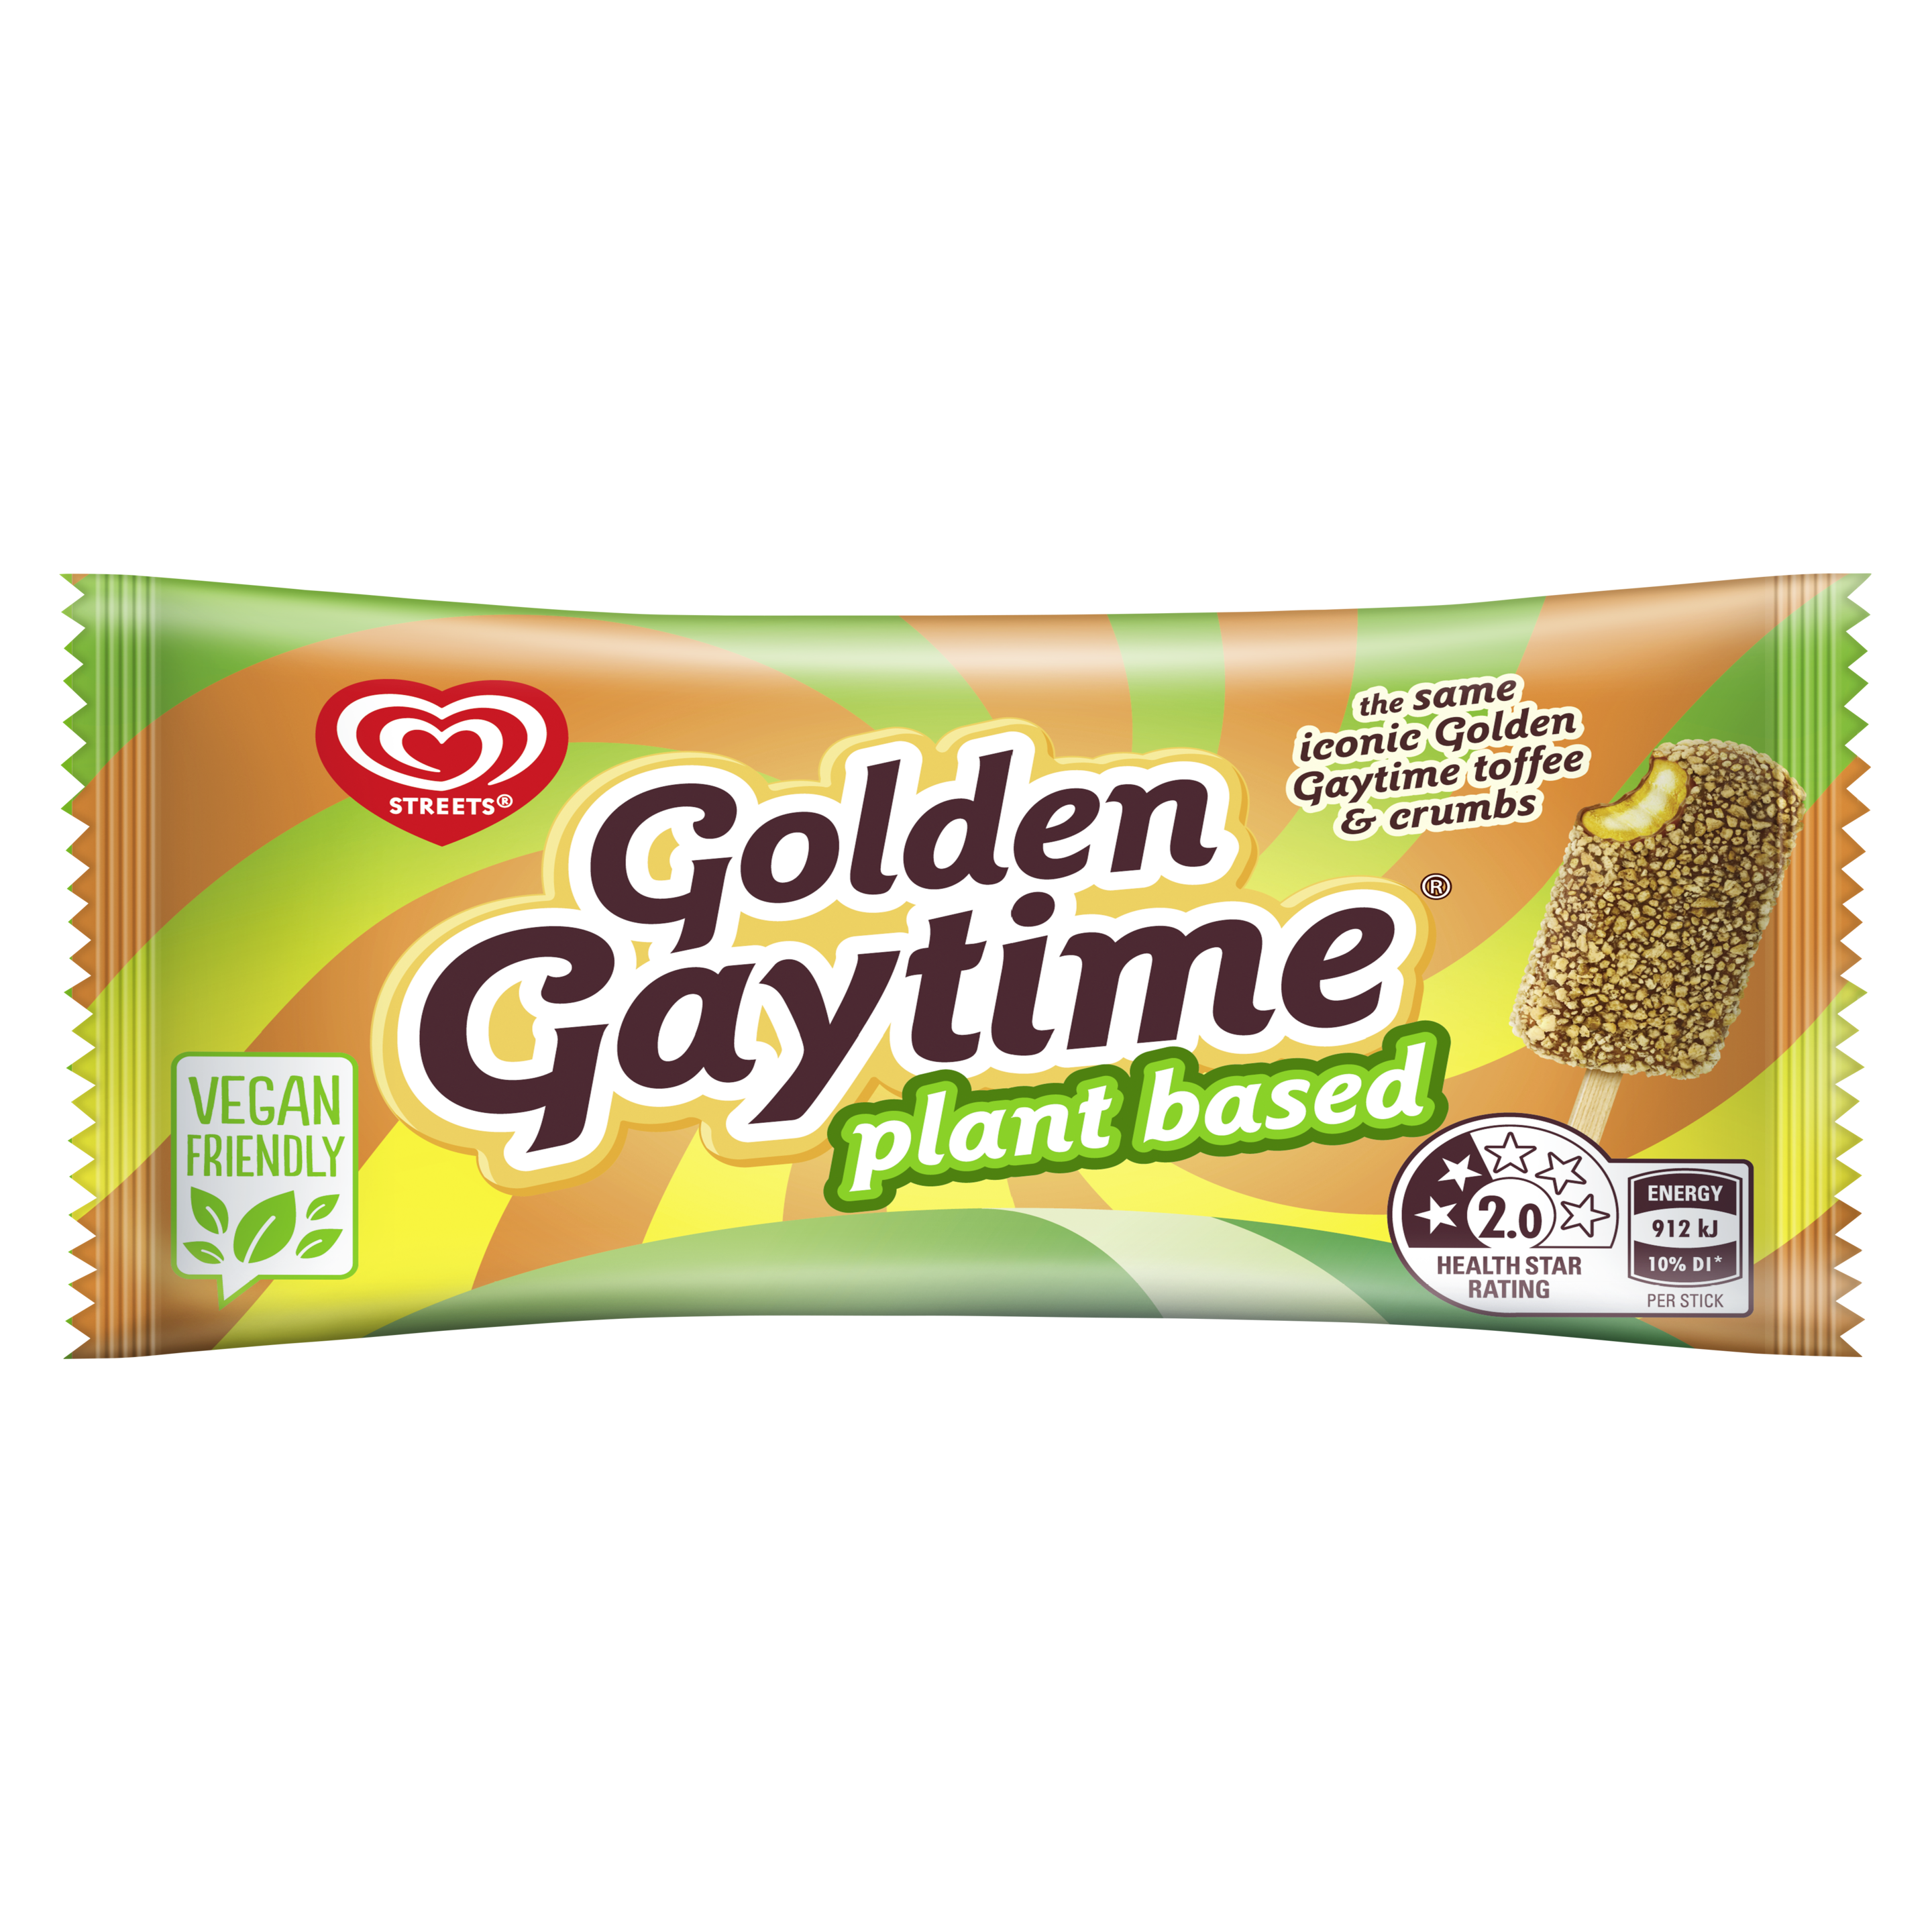 Golden Gaytime Plant Based